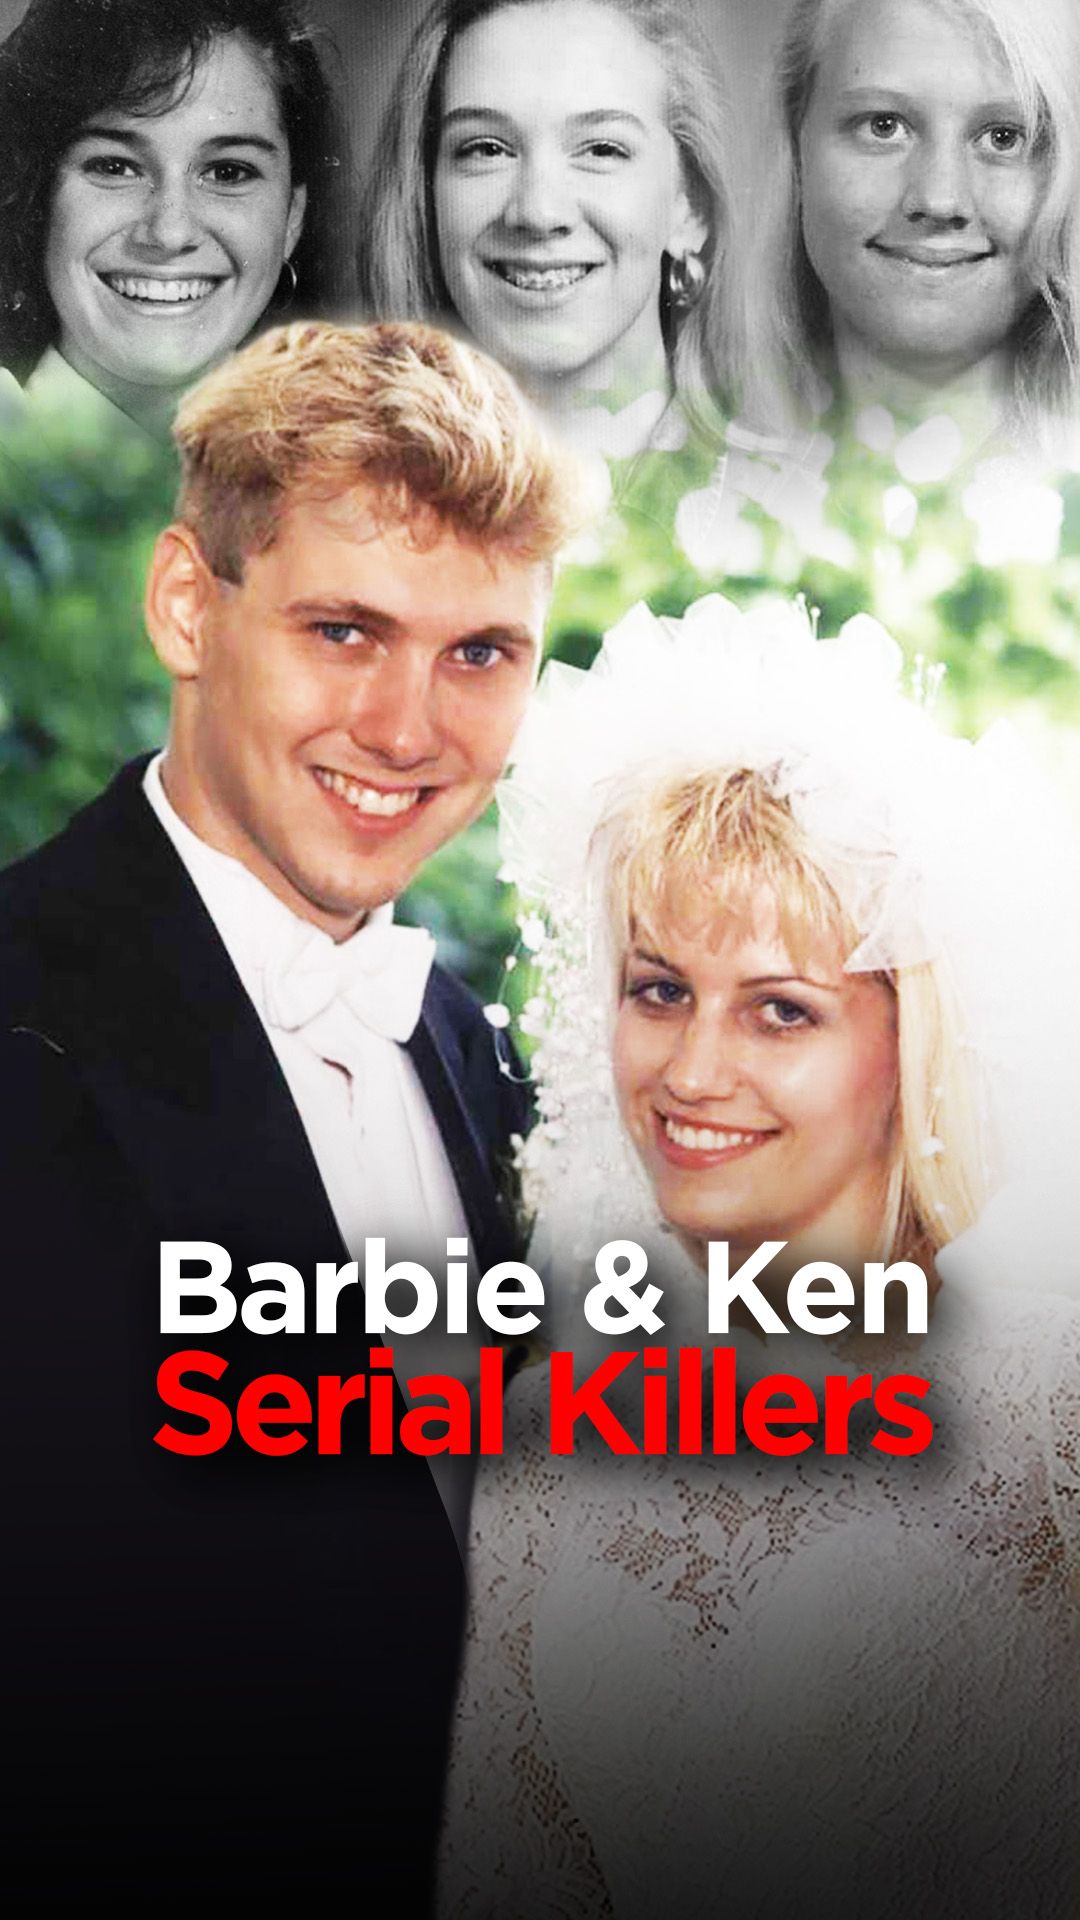 BARBIE E KEN | Serial Killers Karla Homolka e Paul Bernardo